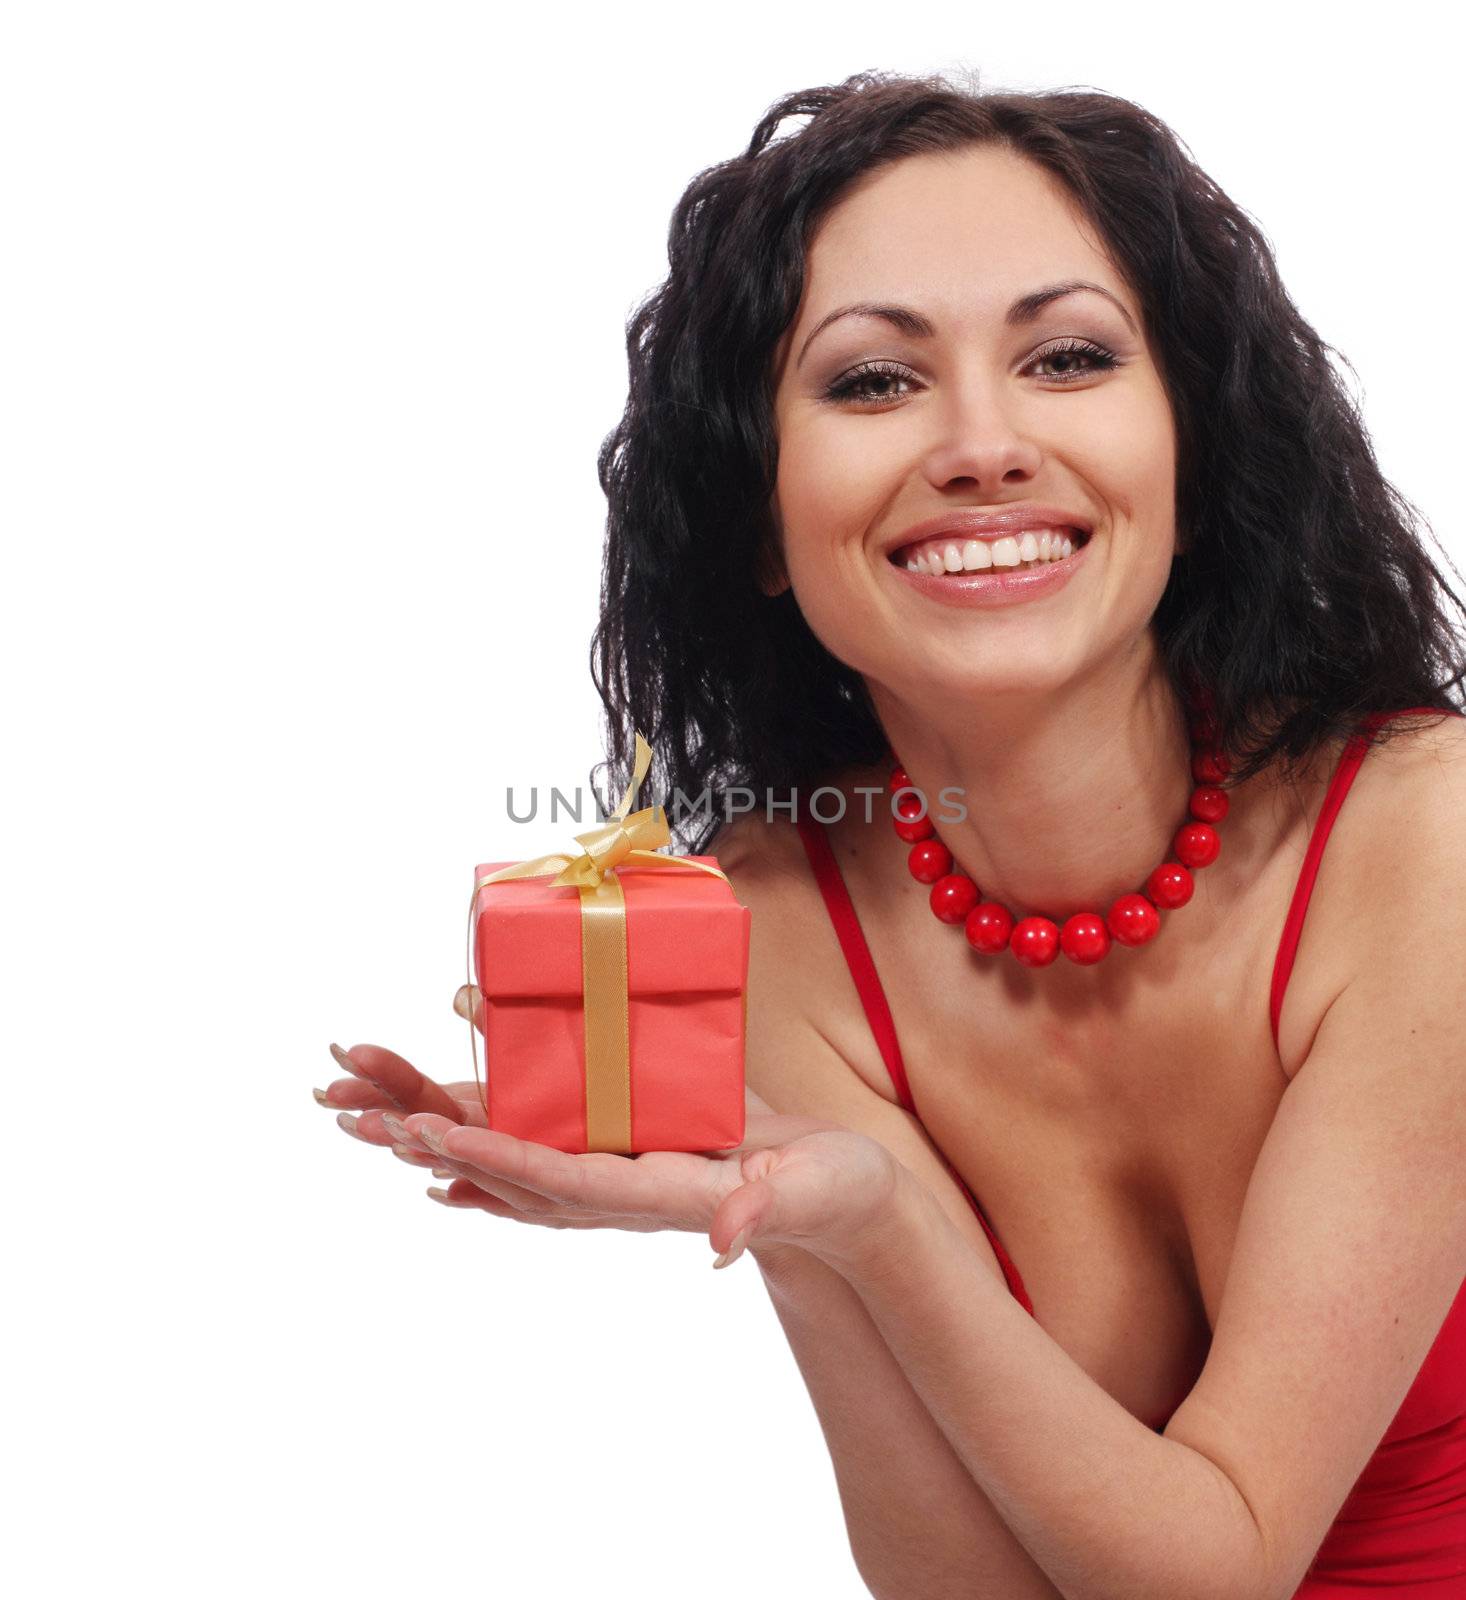 beautiful woman with gift box by rudchenko